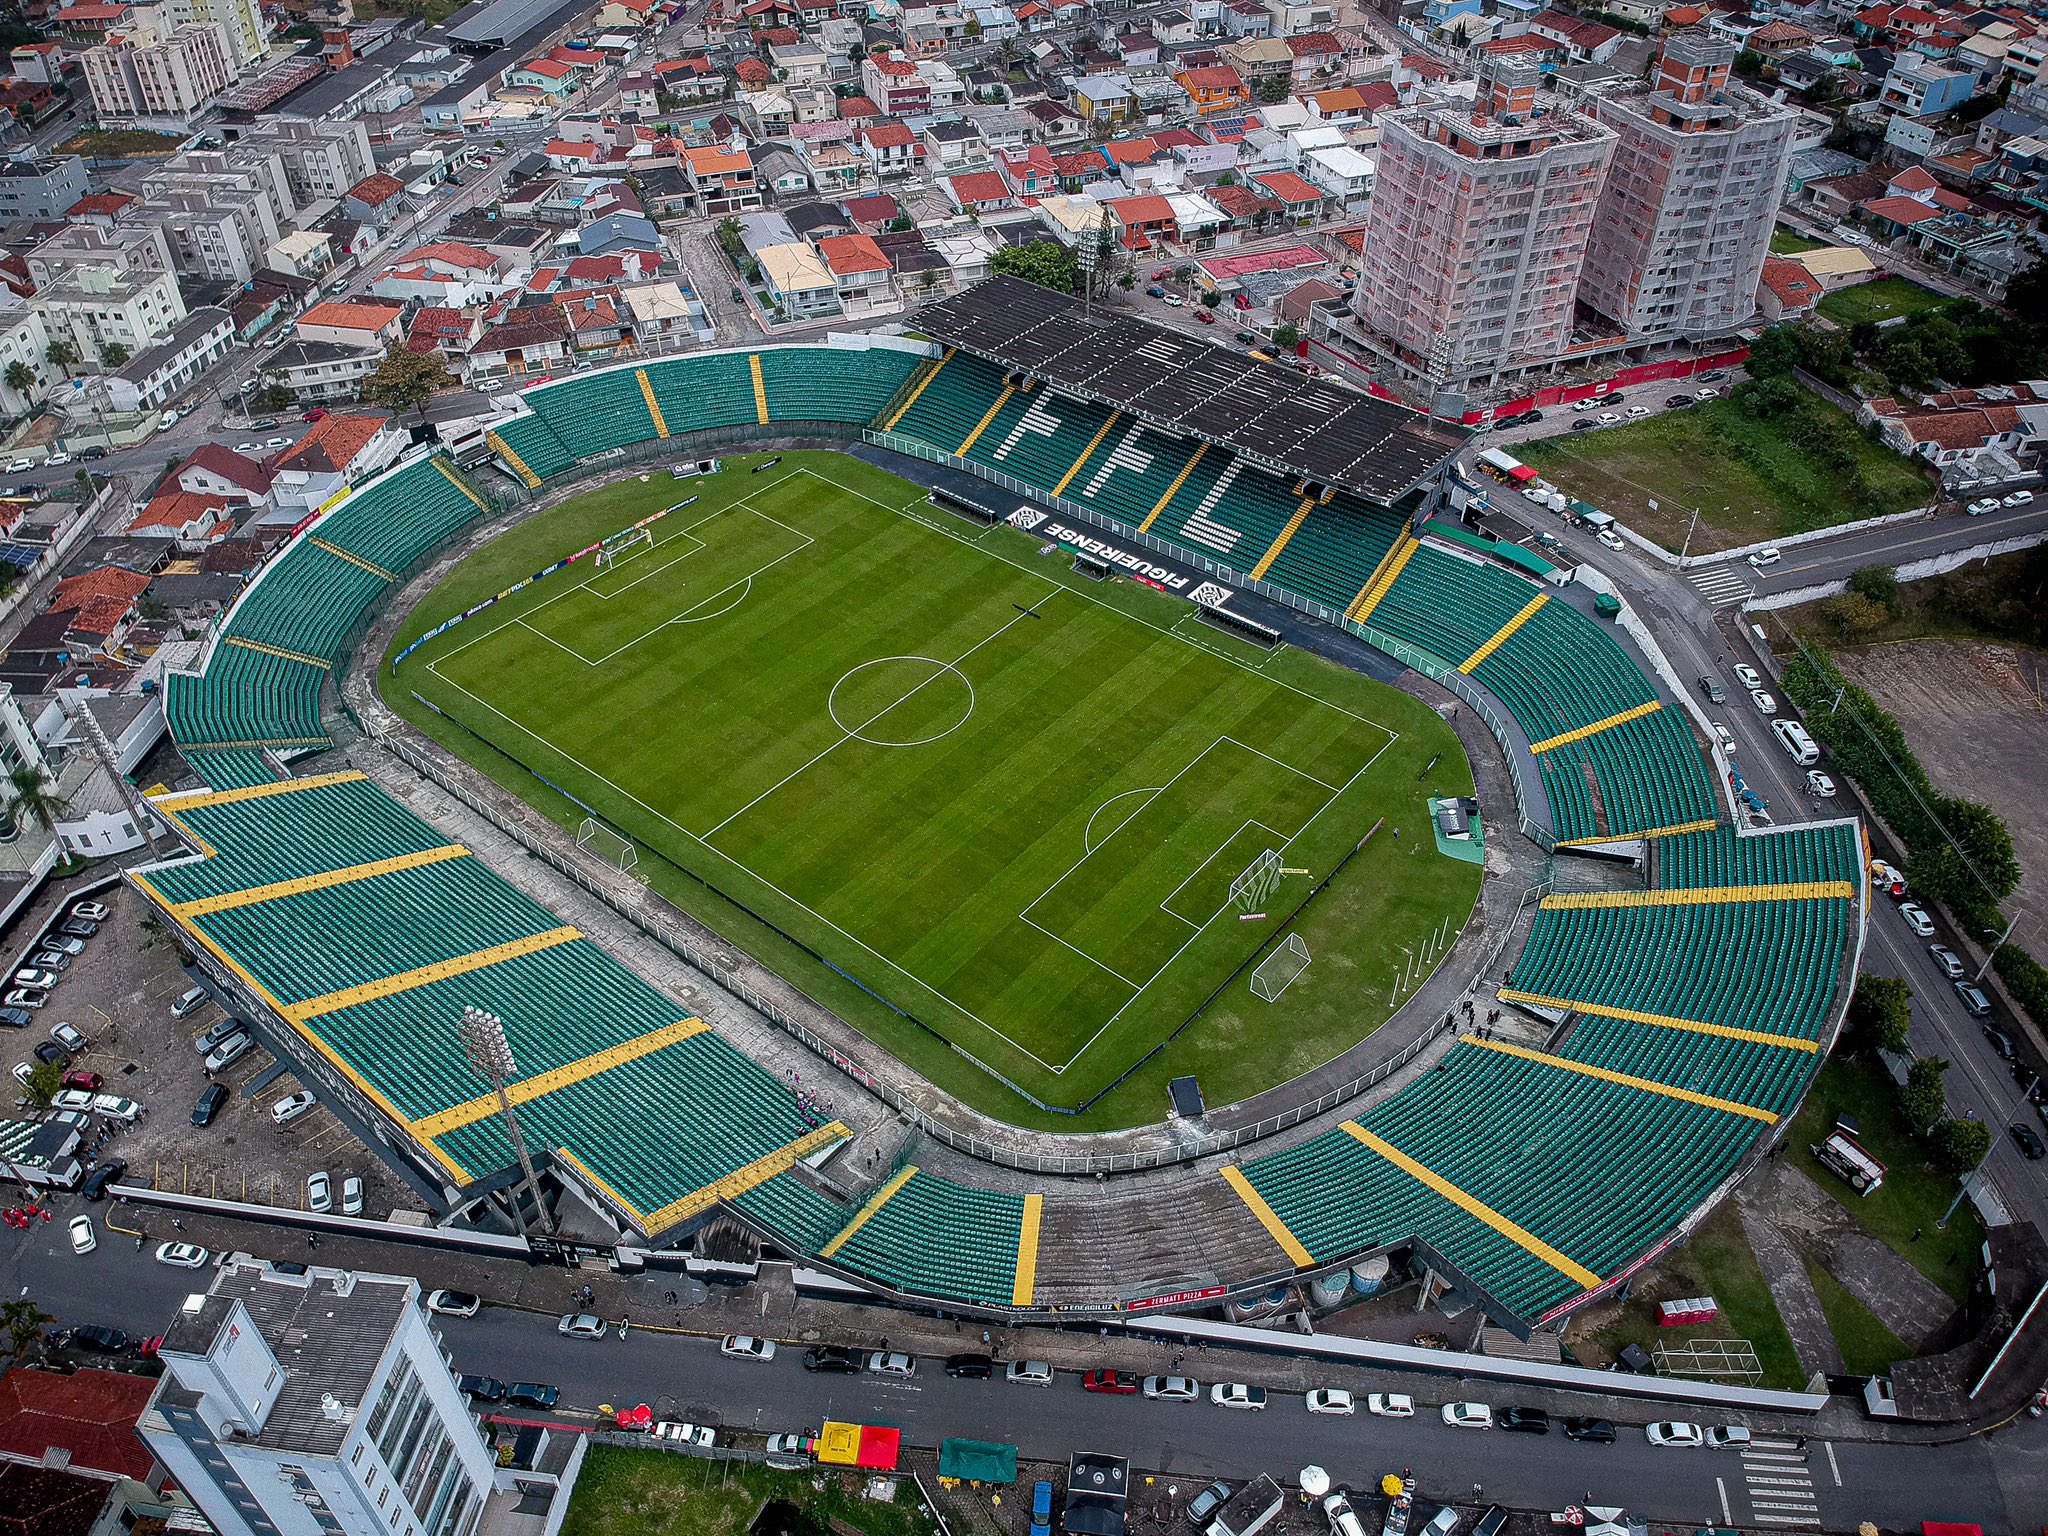 Figueirense x Chapecoense - Copa Santa Catarina 